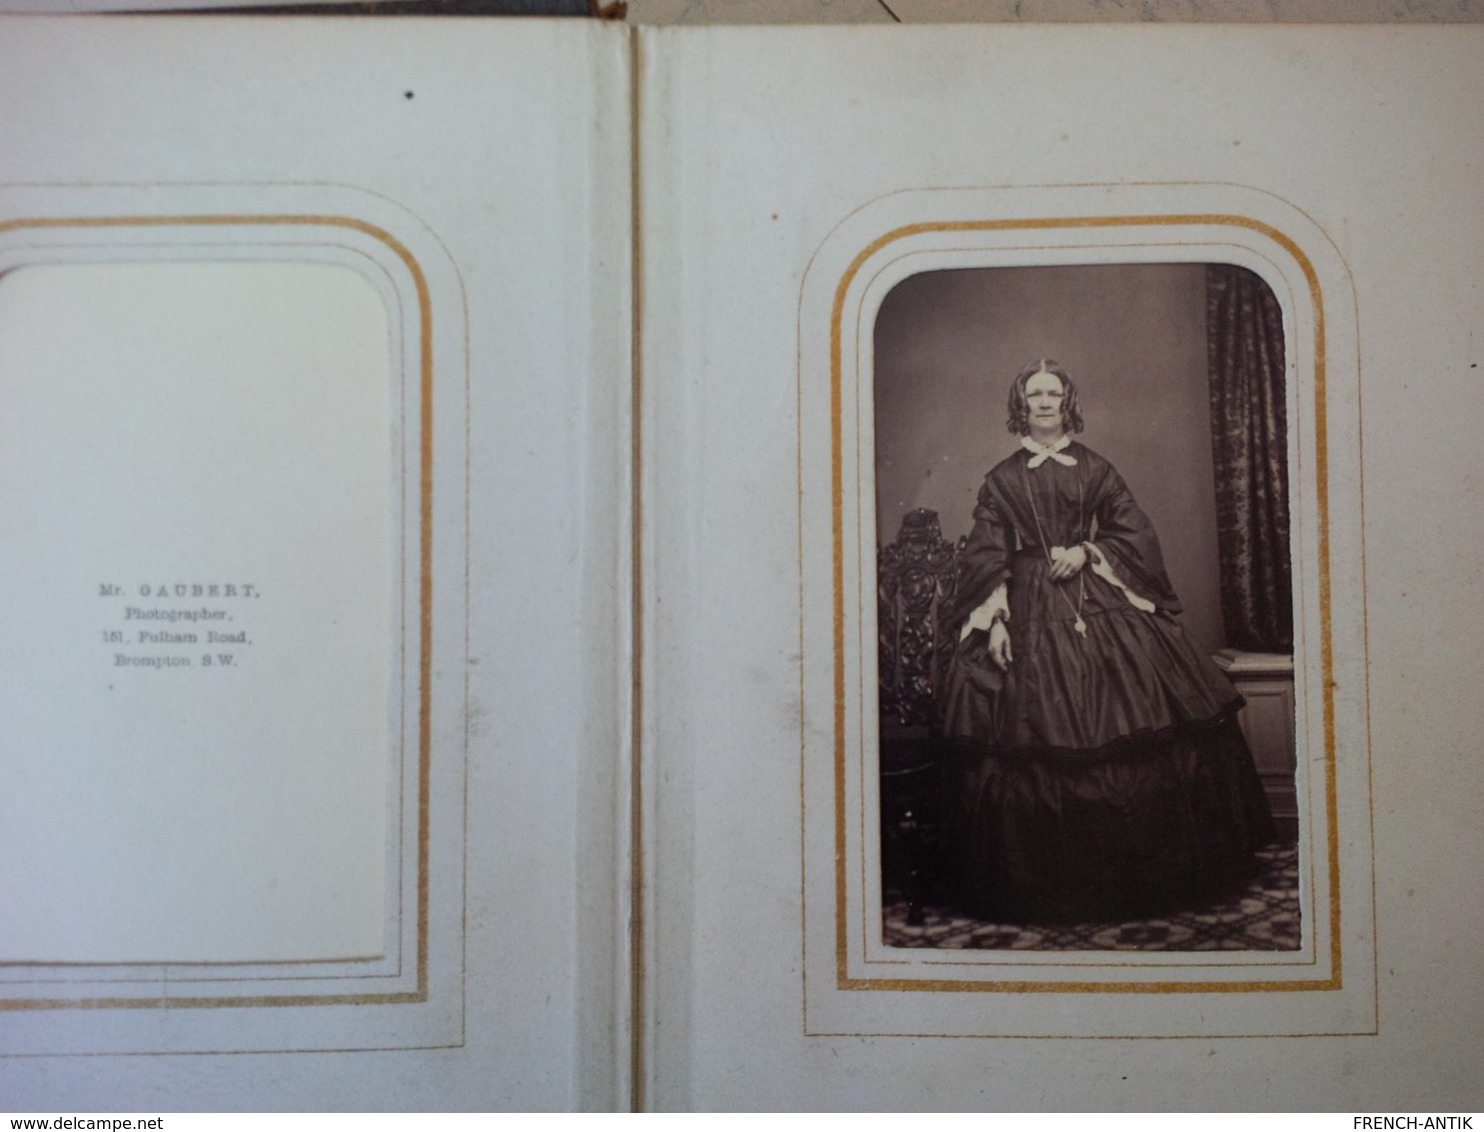 ALBUM PHOTO CDV ROYAUME UNI 1870 1880 PHOTOGRAPHE GAUBERT CILMOR THREDDERS MC LEAN AND HAES - Albums & Collections